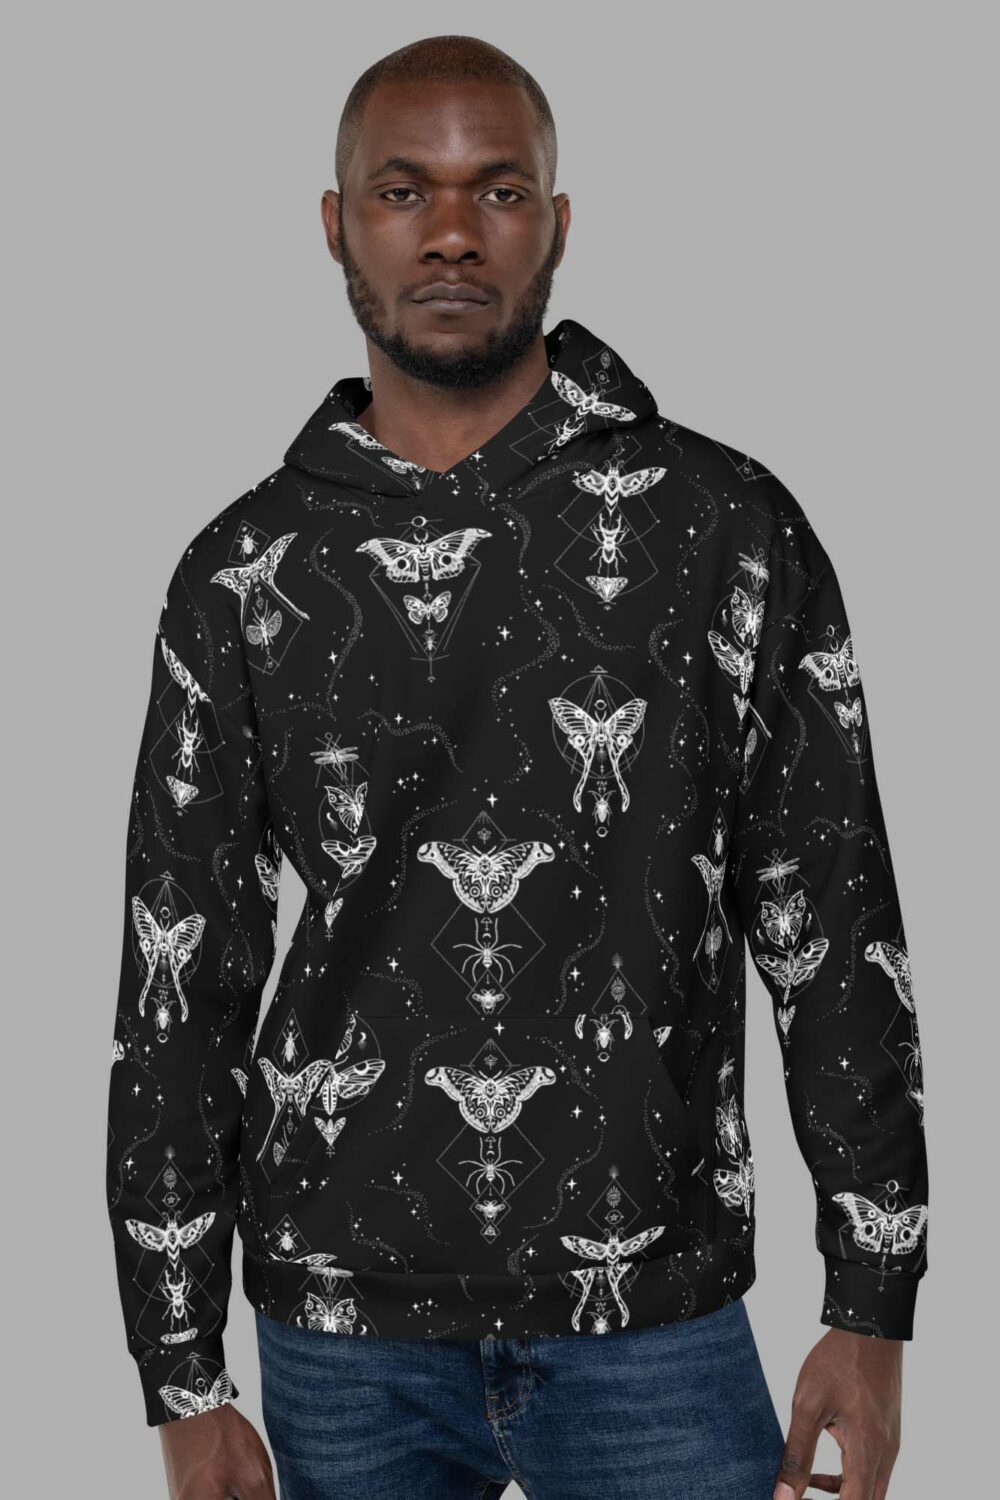 cosmic drifters hoodie front2 entomon print